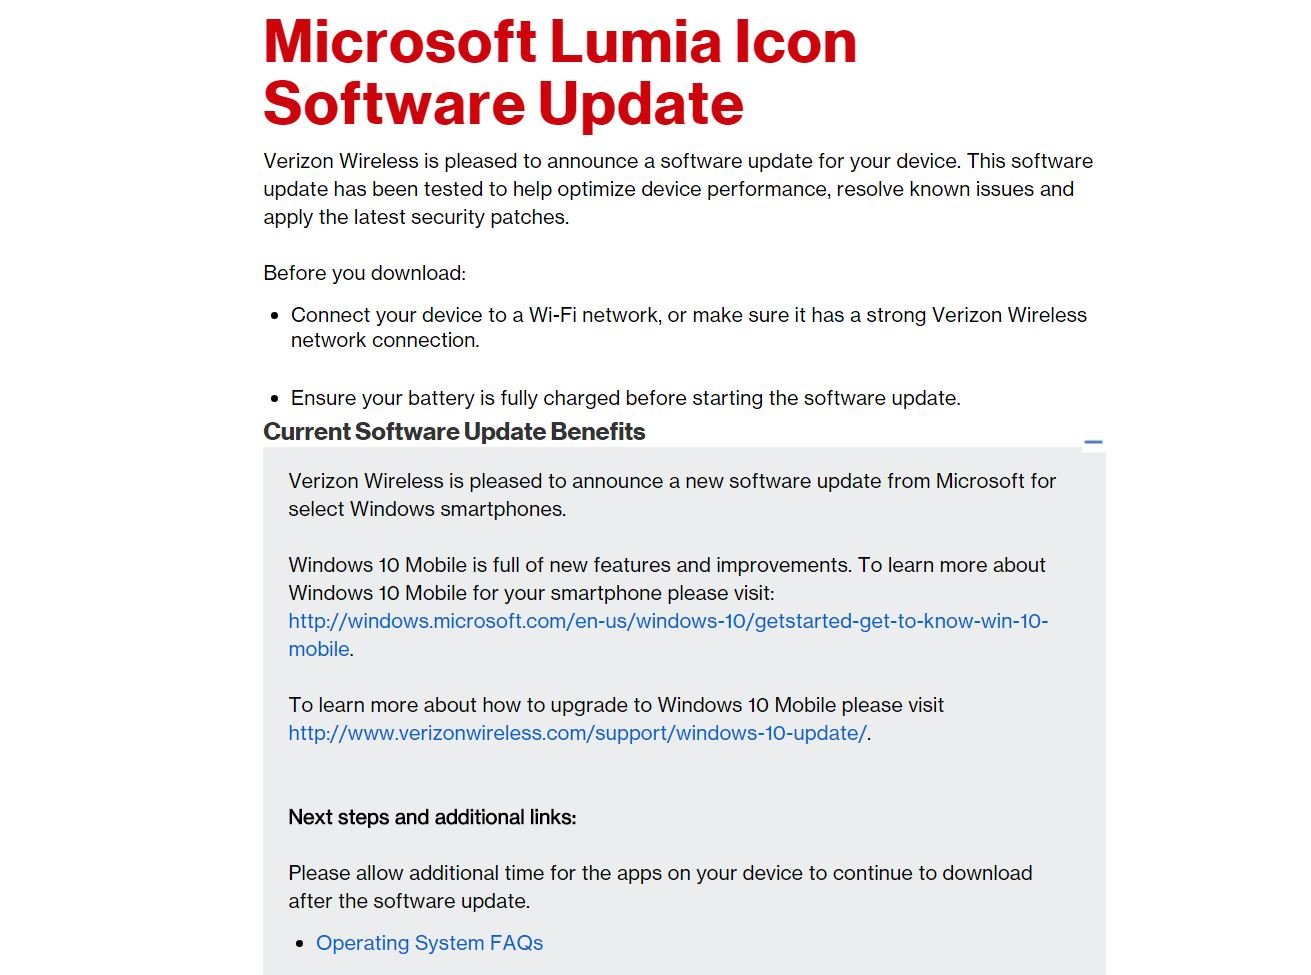 Verizon Lumia Icon devices receiving Windows 10 Mobile upgrade tomorrow, June 23 - OnMSFT.com - June 22, 2016